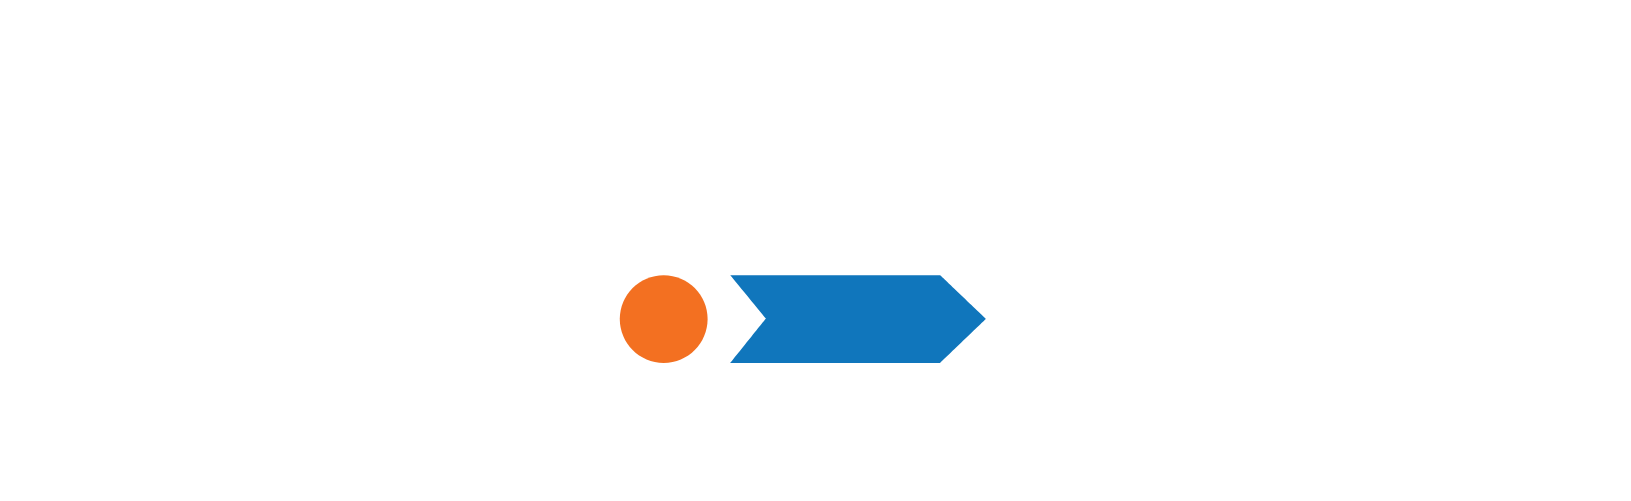 Akero Therapeutics Logo groß für dunkle Hintergründe (transparentes PNG)